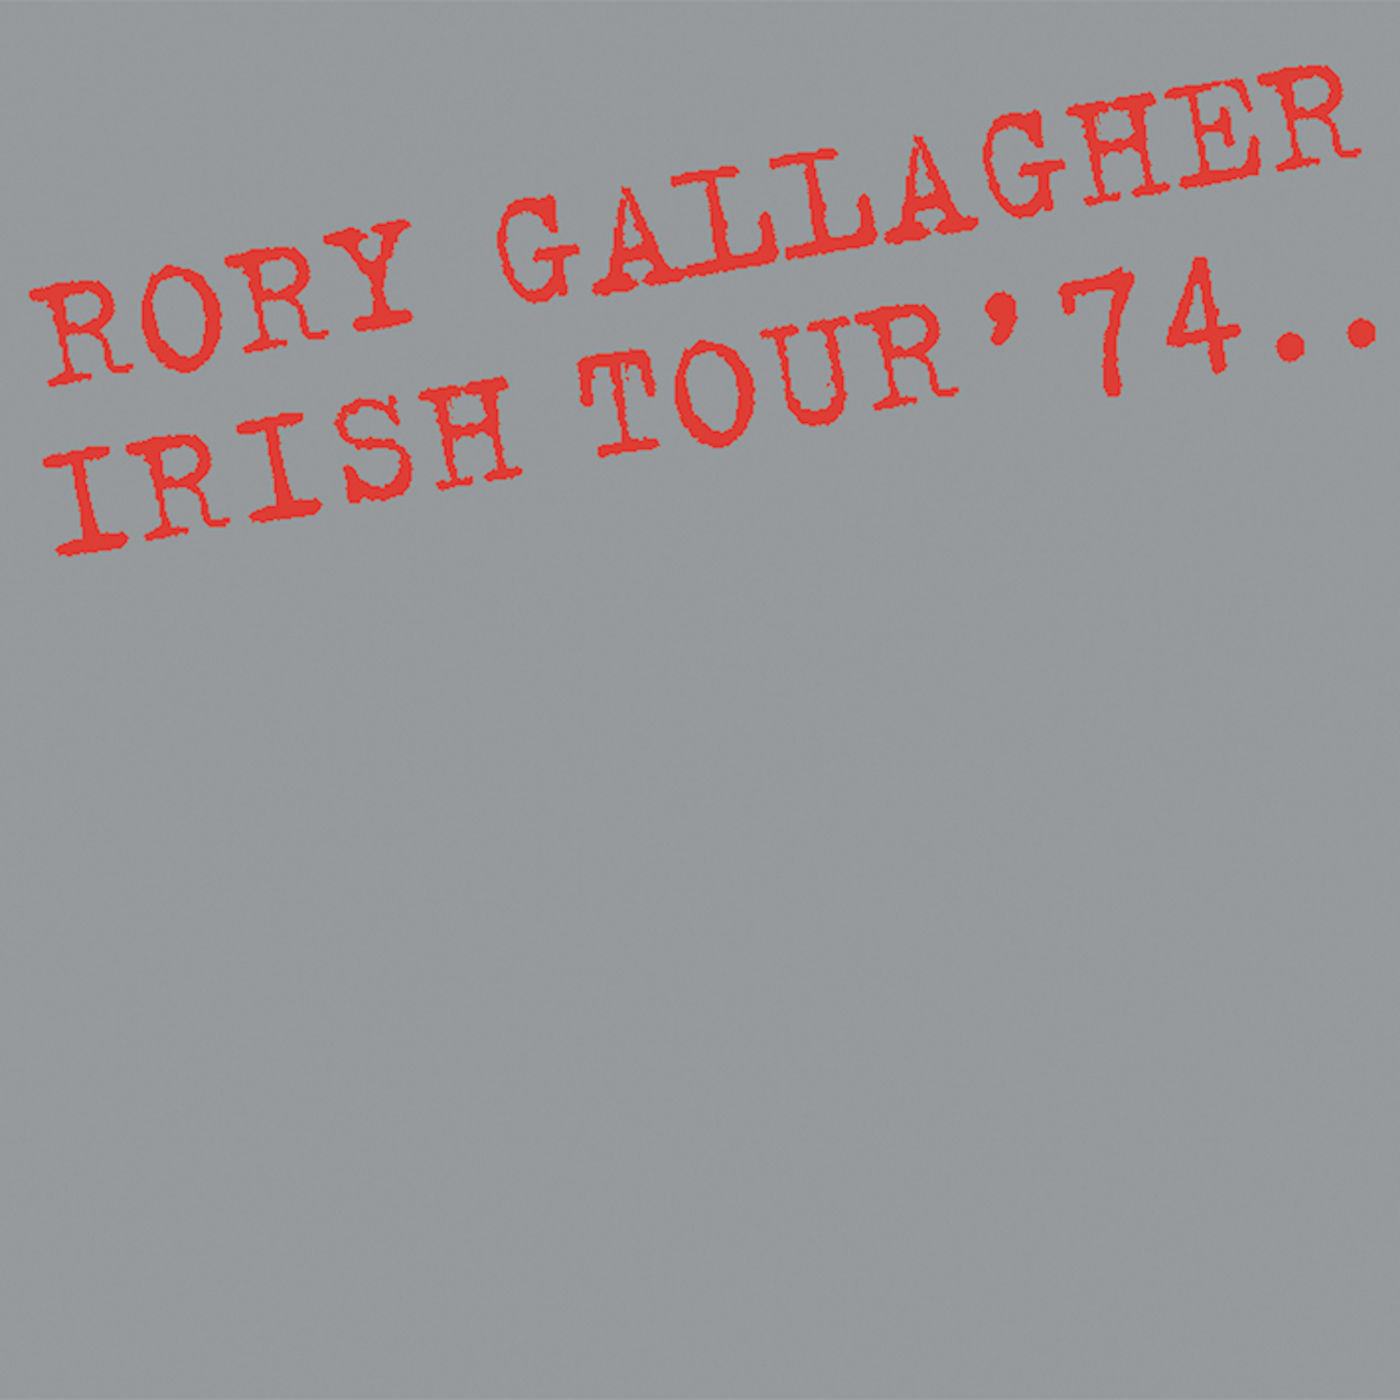 Rory Gallagher - Irish Tour ‘74 (Remastered) (1974/2020) [FLAC 24bit/96kHz]